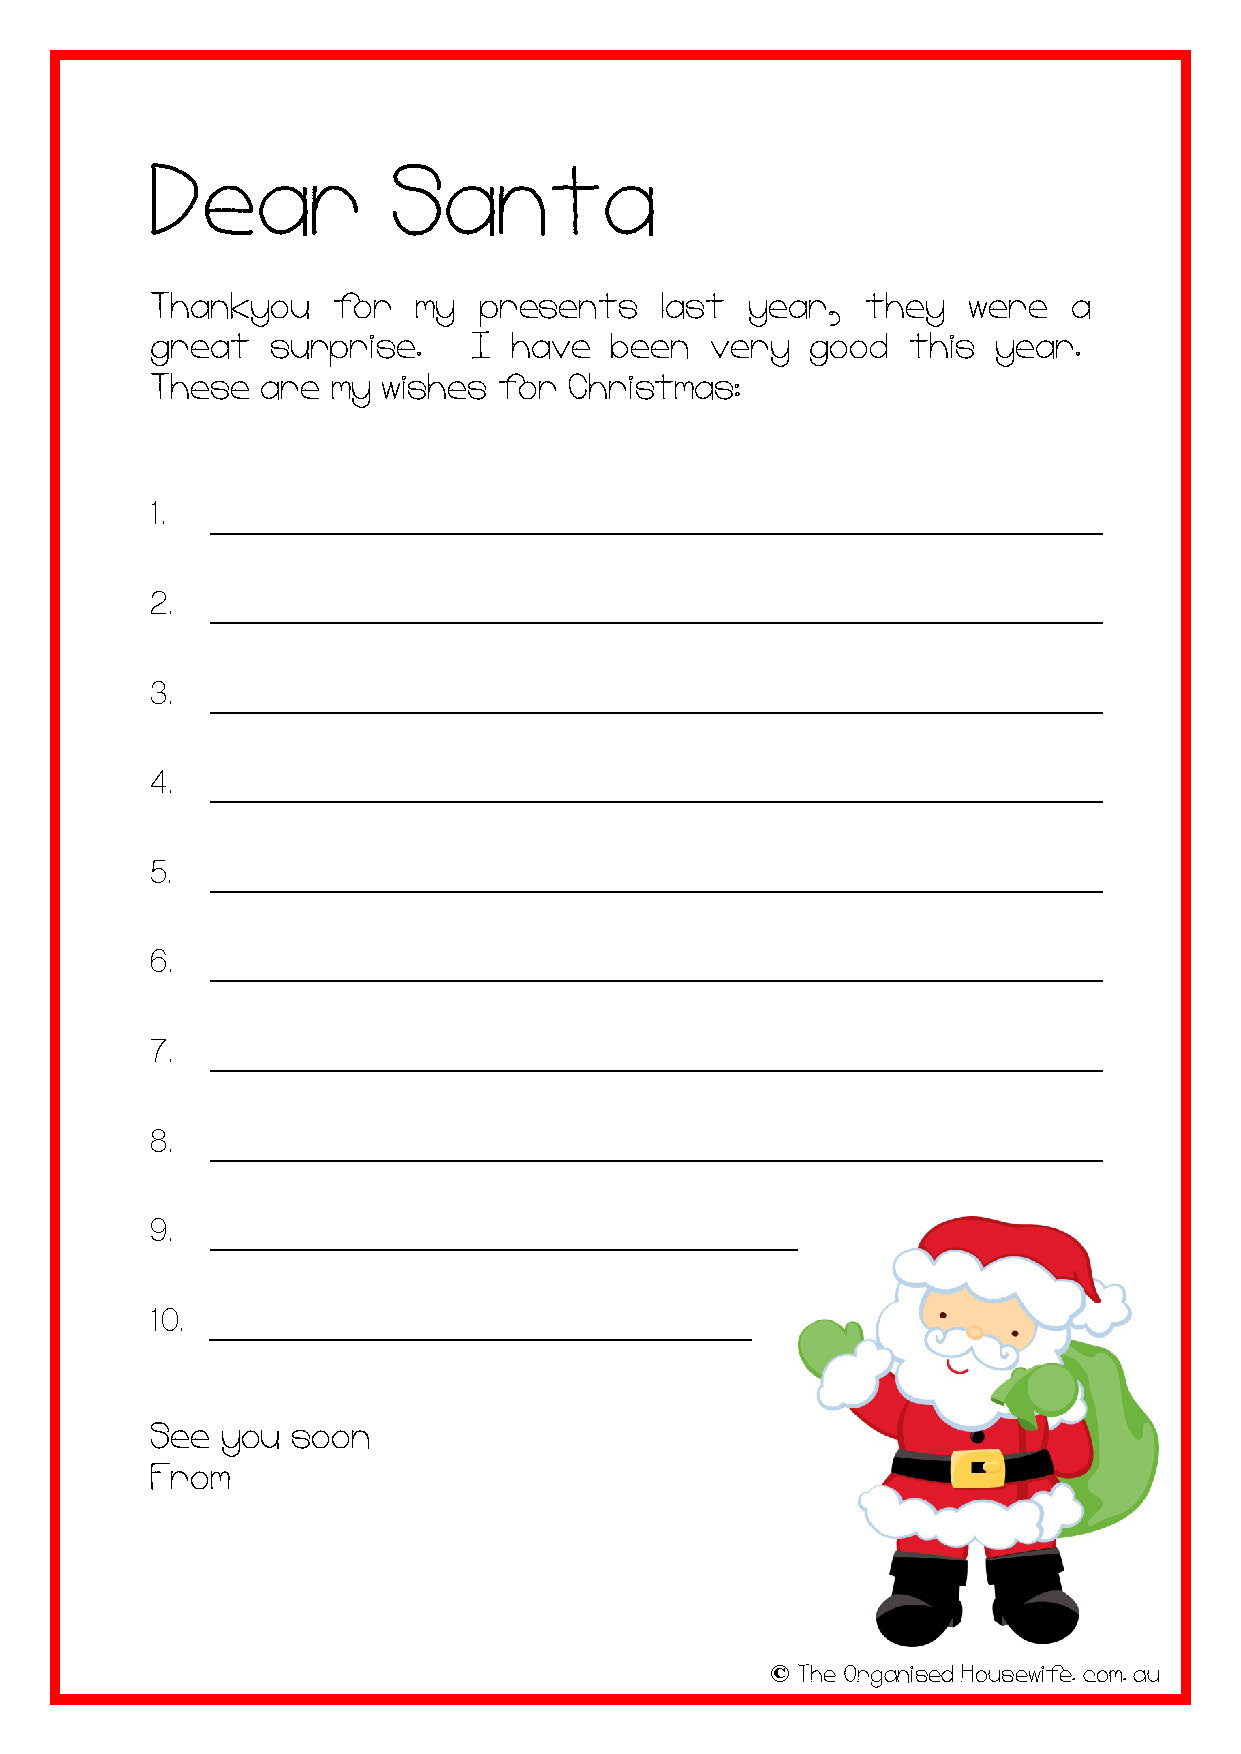 Dear Santa Letters Printable Free